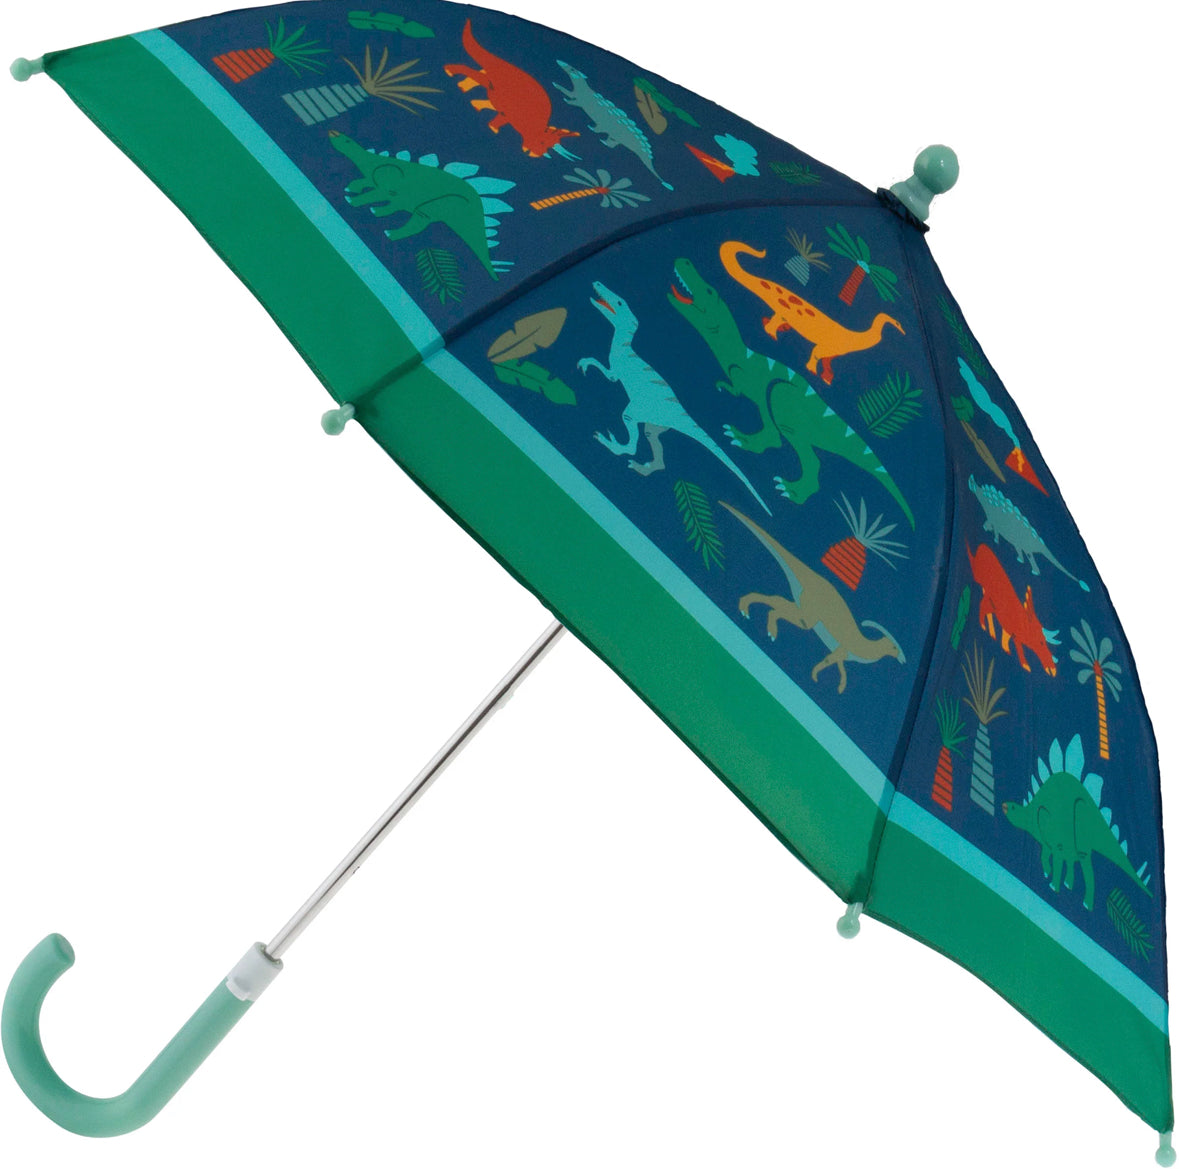 A Stephen Joseph green dinosaur umbrella for rainy days.